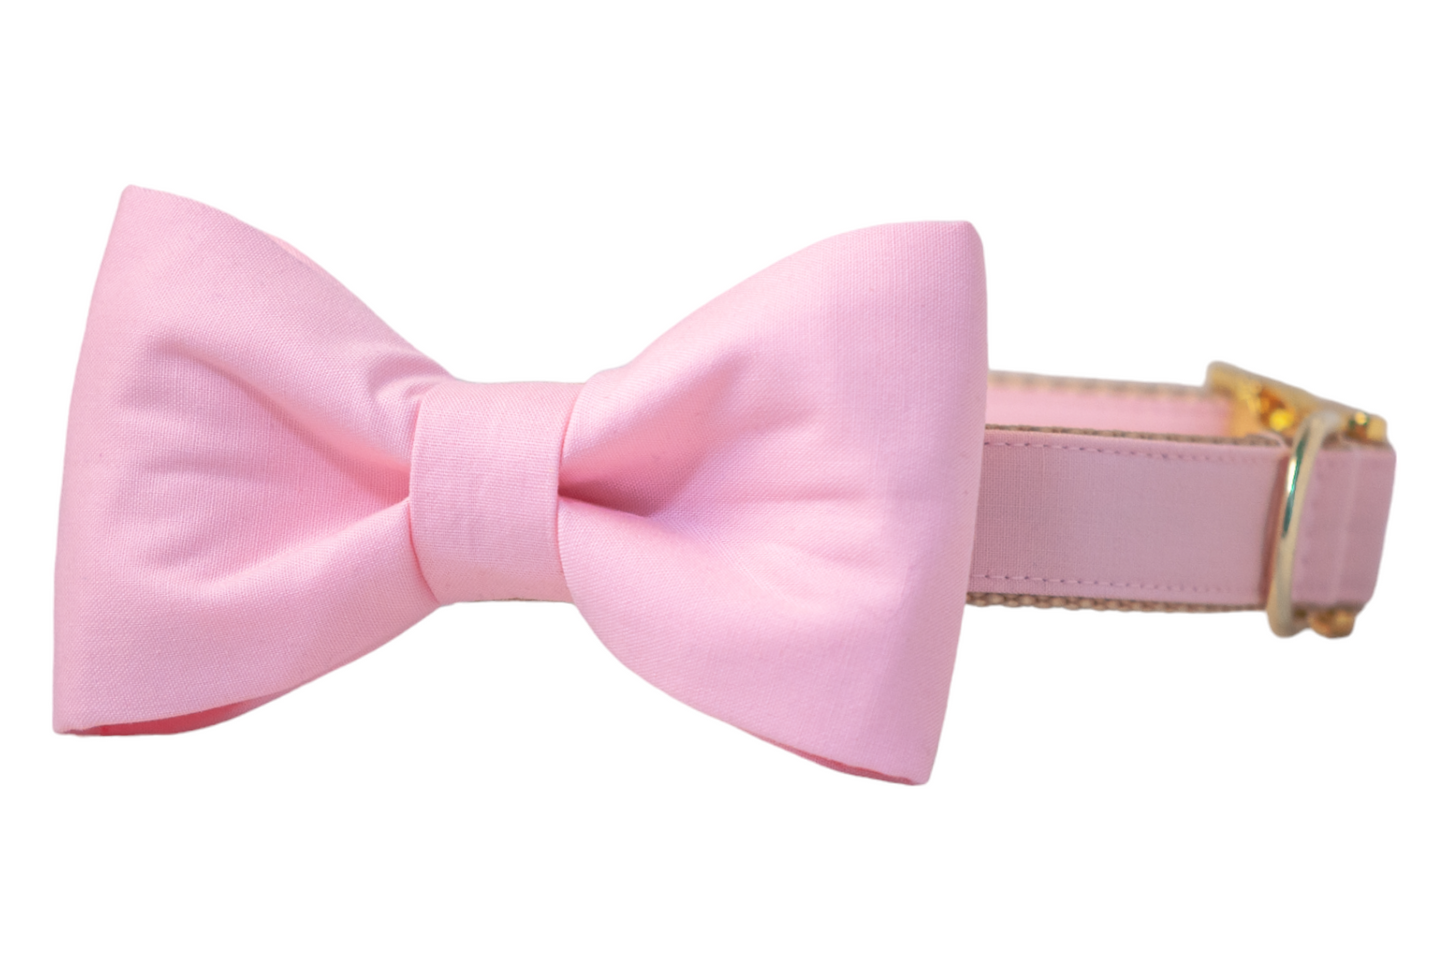 Blush Pink Bow Tie Dog Collar - Crew LaLa